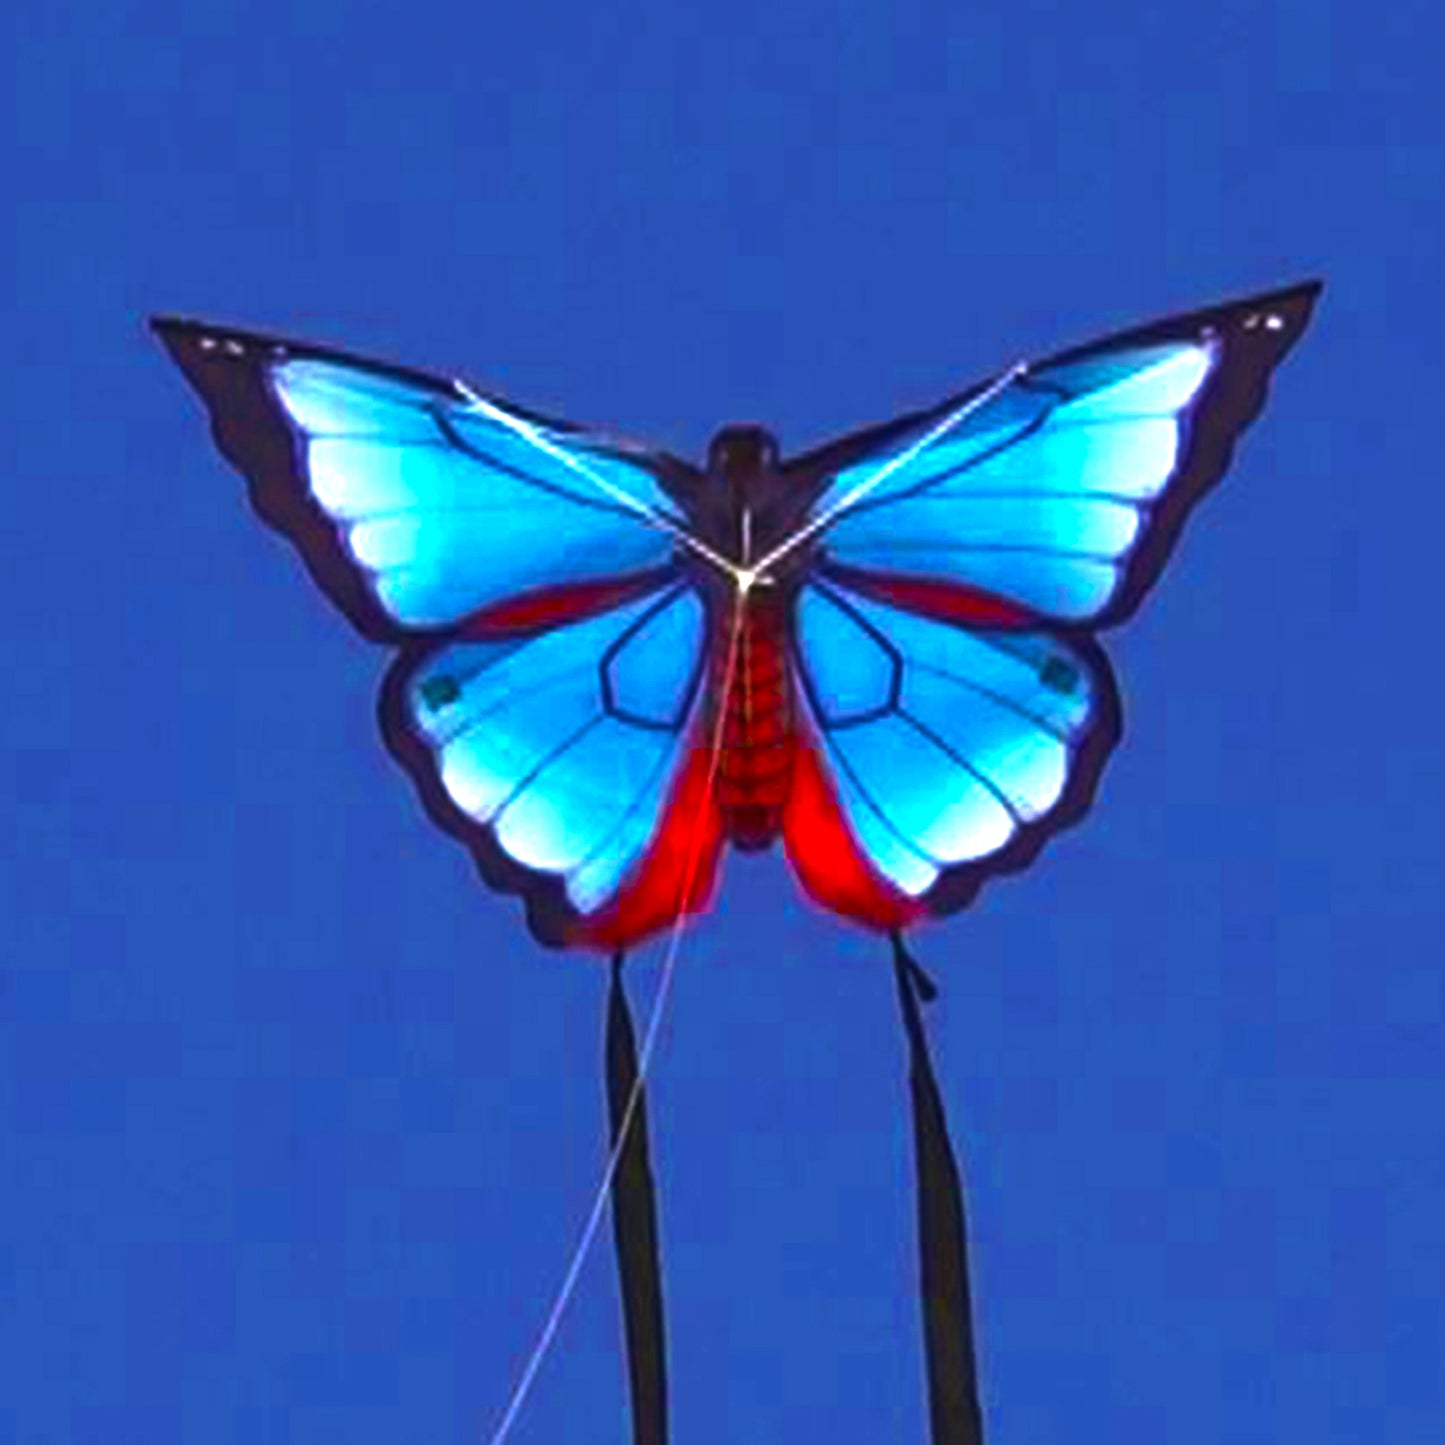 WindNSun Butterfly Karner Blue Nylon Kite, 32 Inches Wide